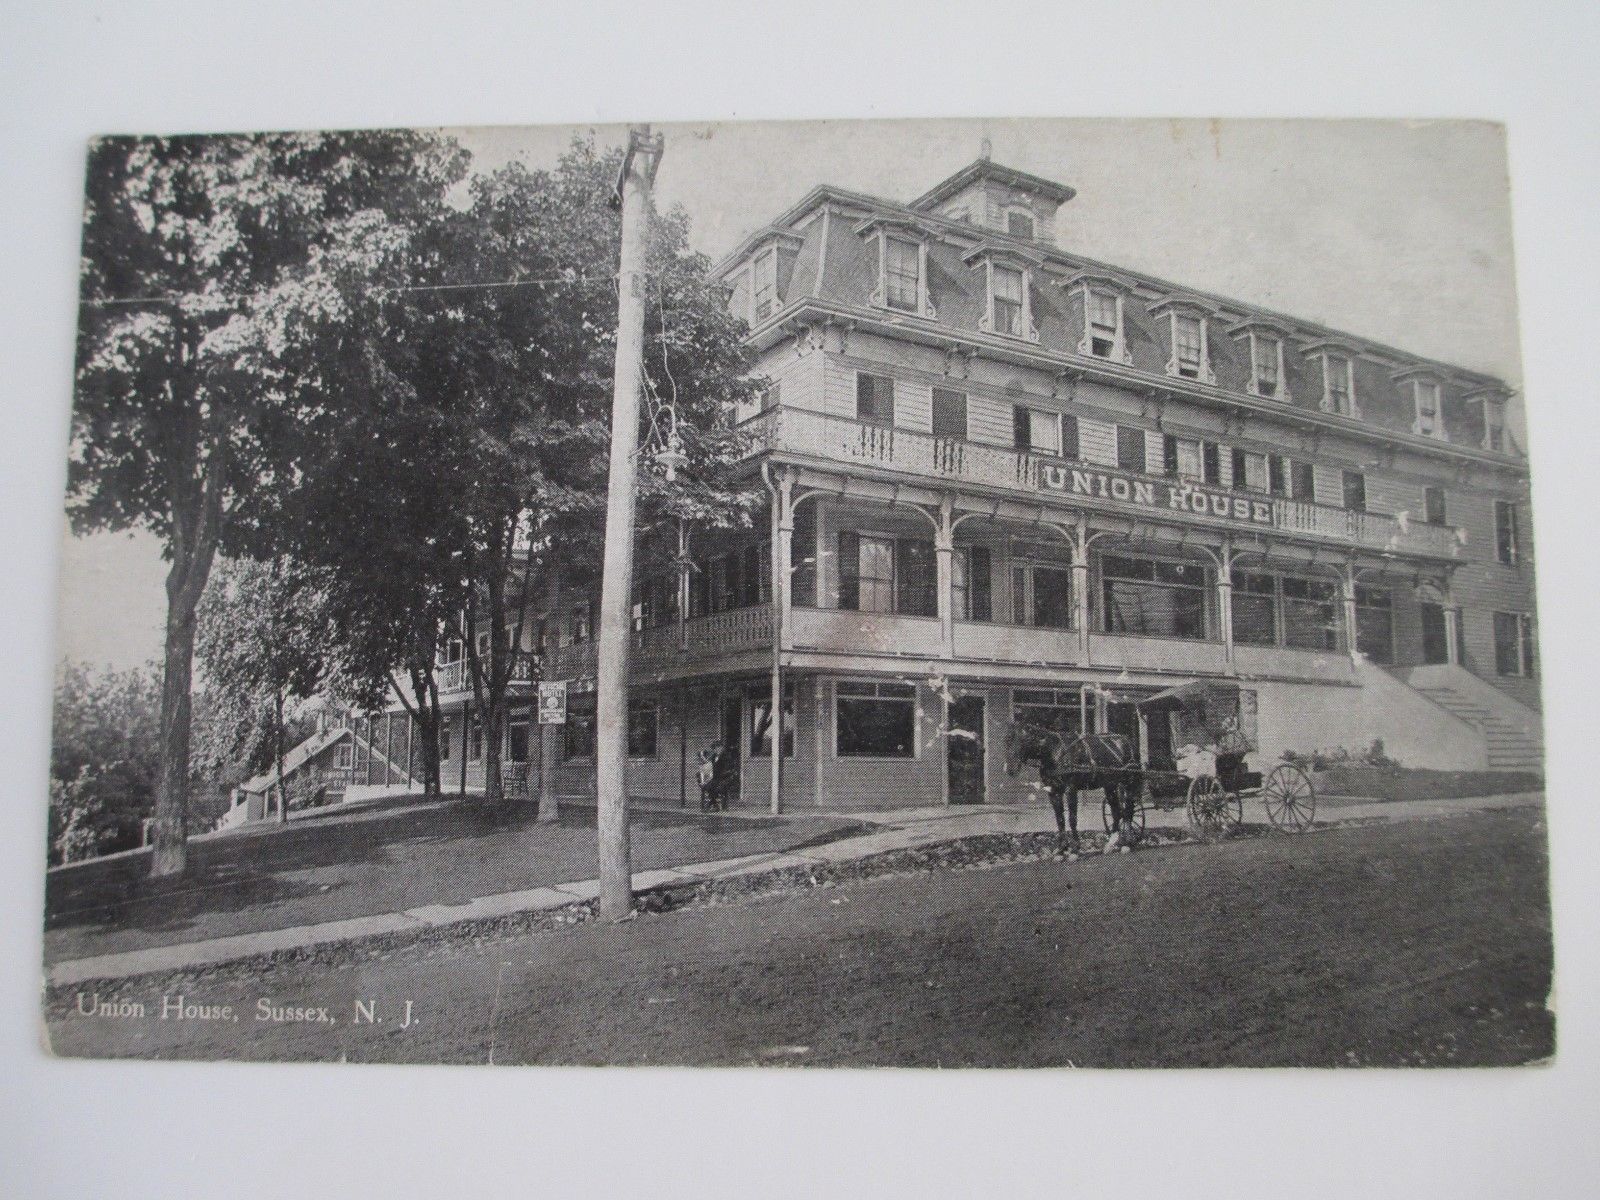 Sussex - The Union Hotel - c 1910